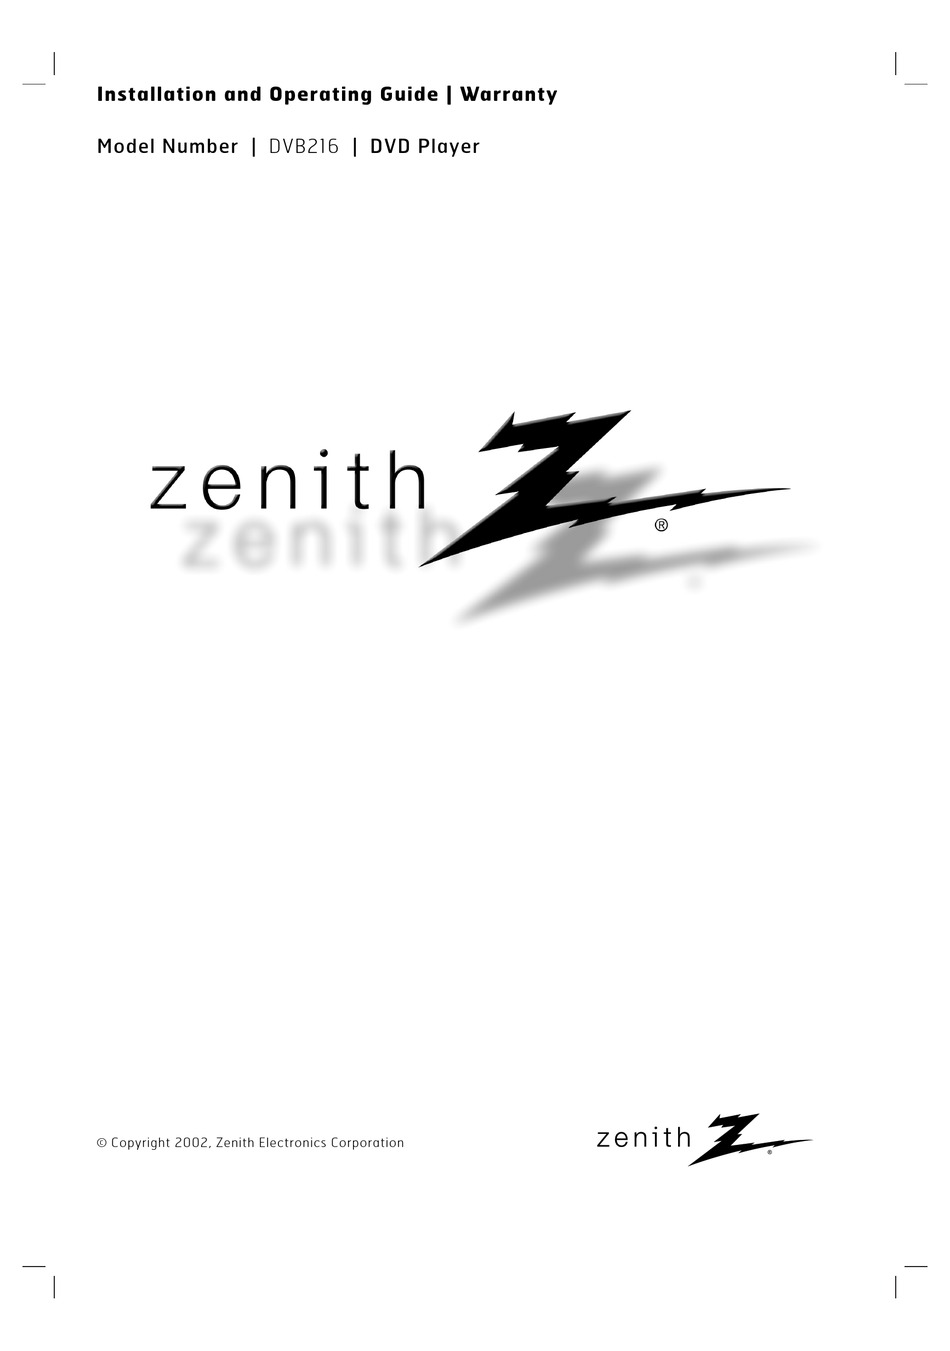 zenith cd / dvd error